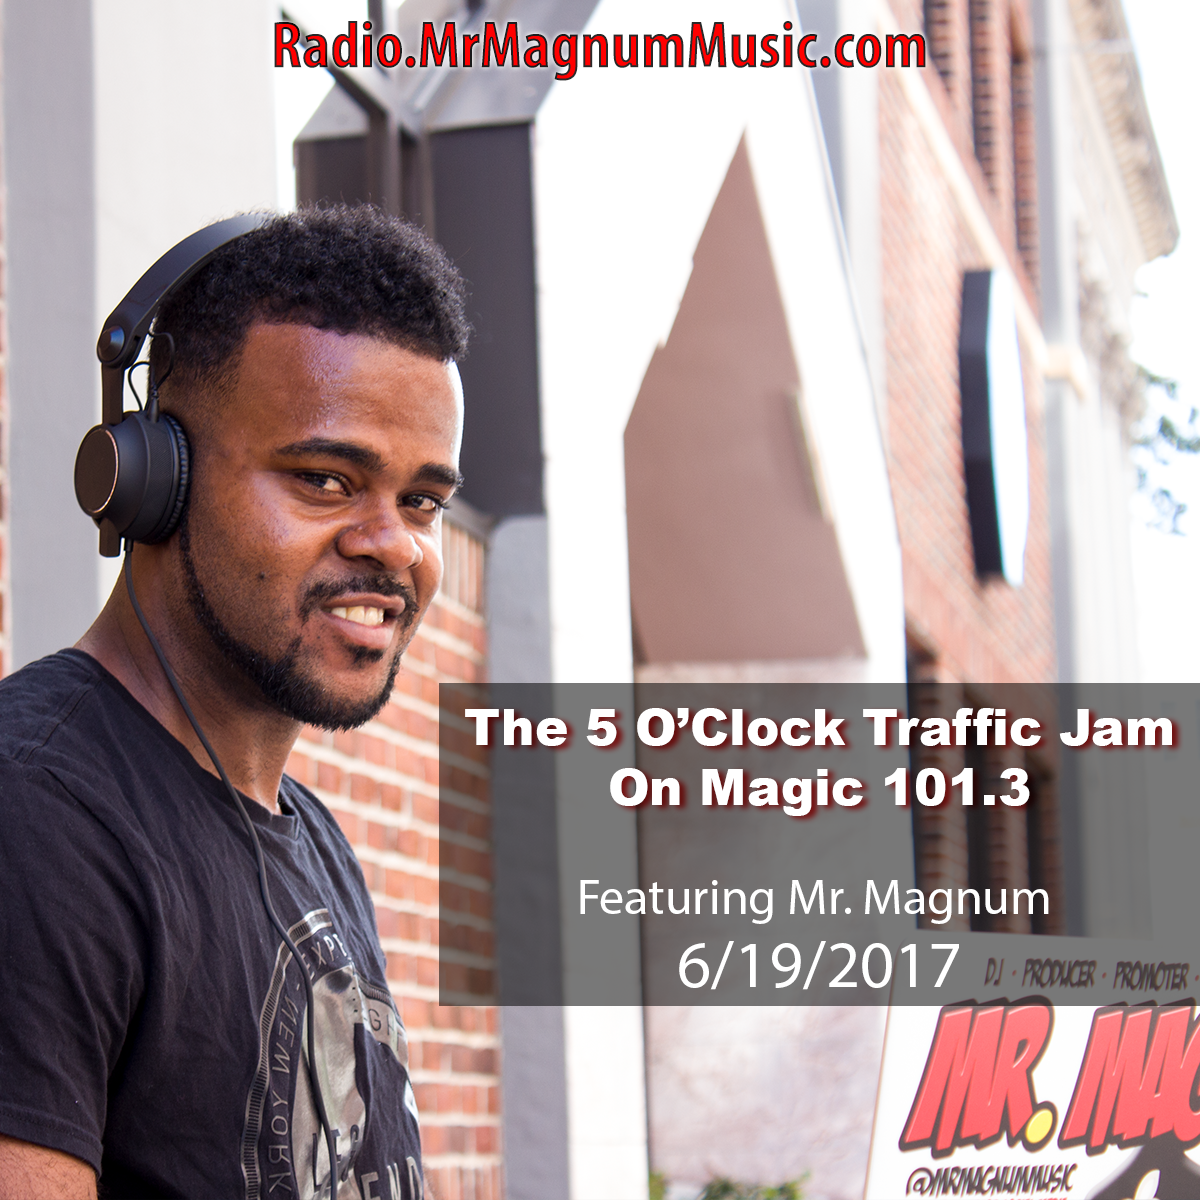 The 5 O'Clock Traffic Jam 20170619 featuring Gainesville's #1 DJ, Mr. Magnum on Magic 101.3